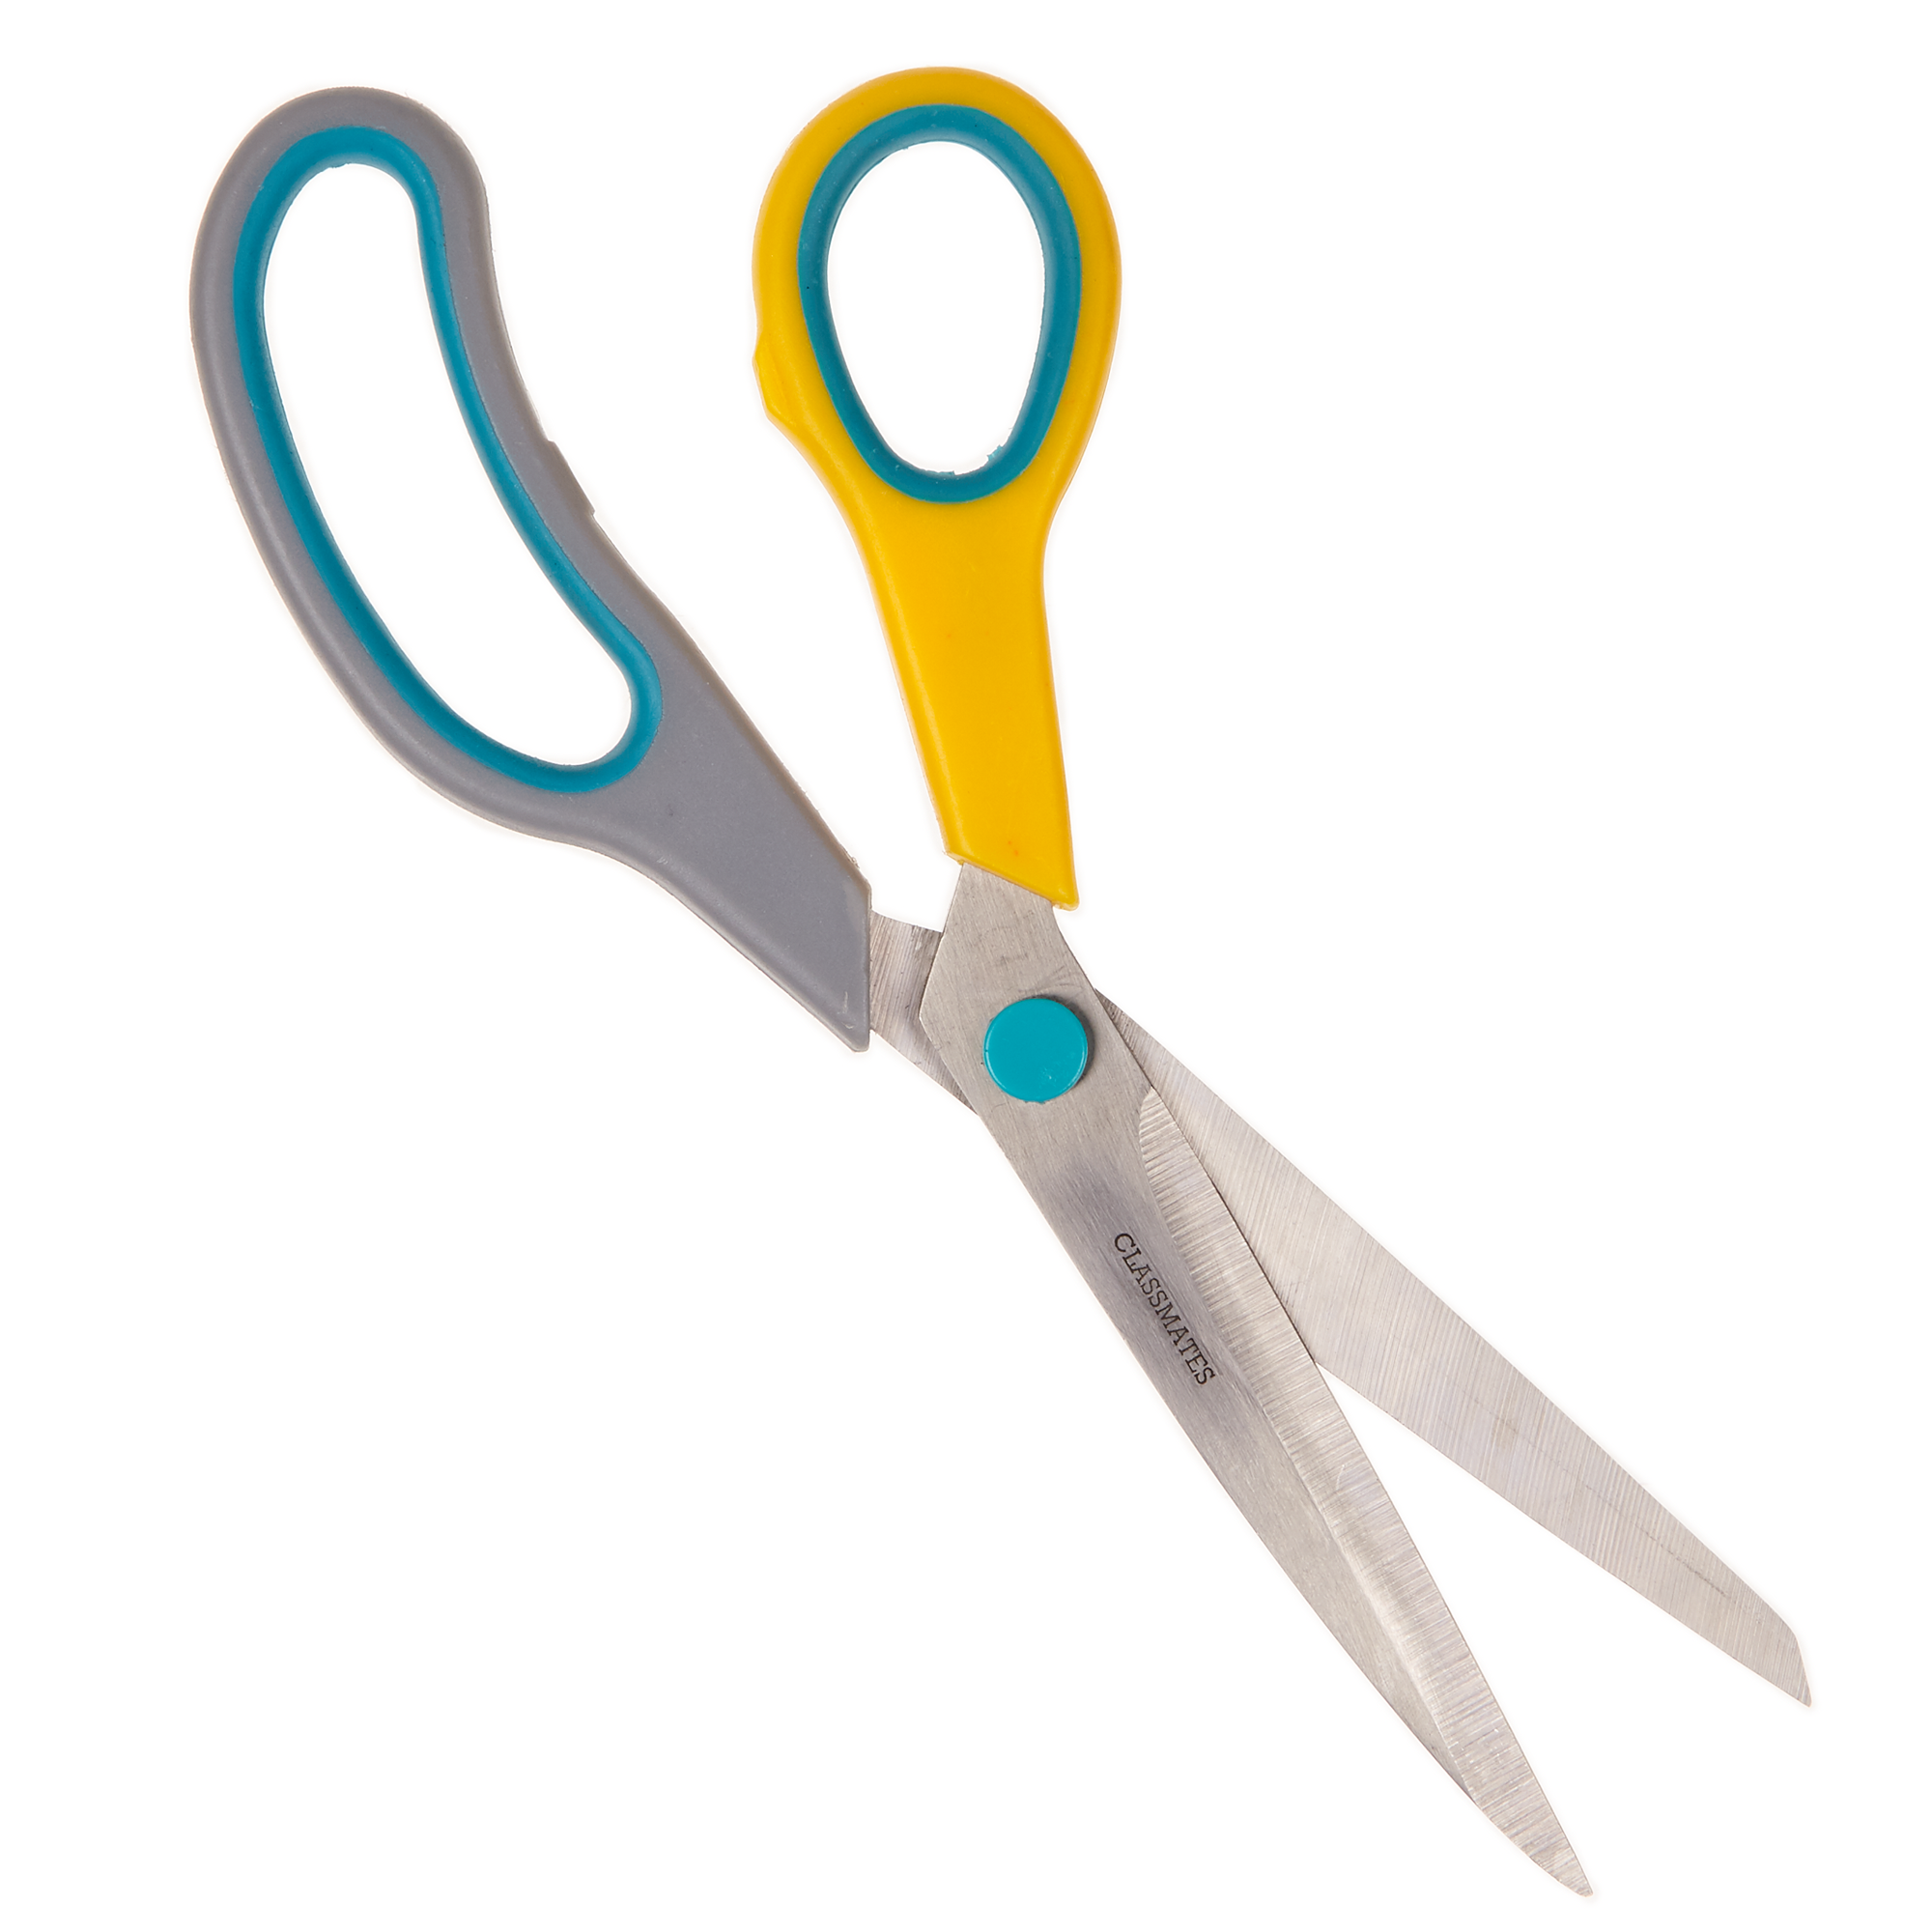 HC1815181 - Classmates School Scissors - Left Handed - Pack of 1